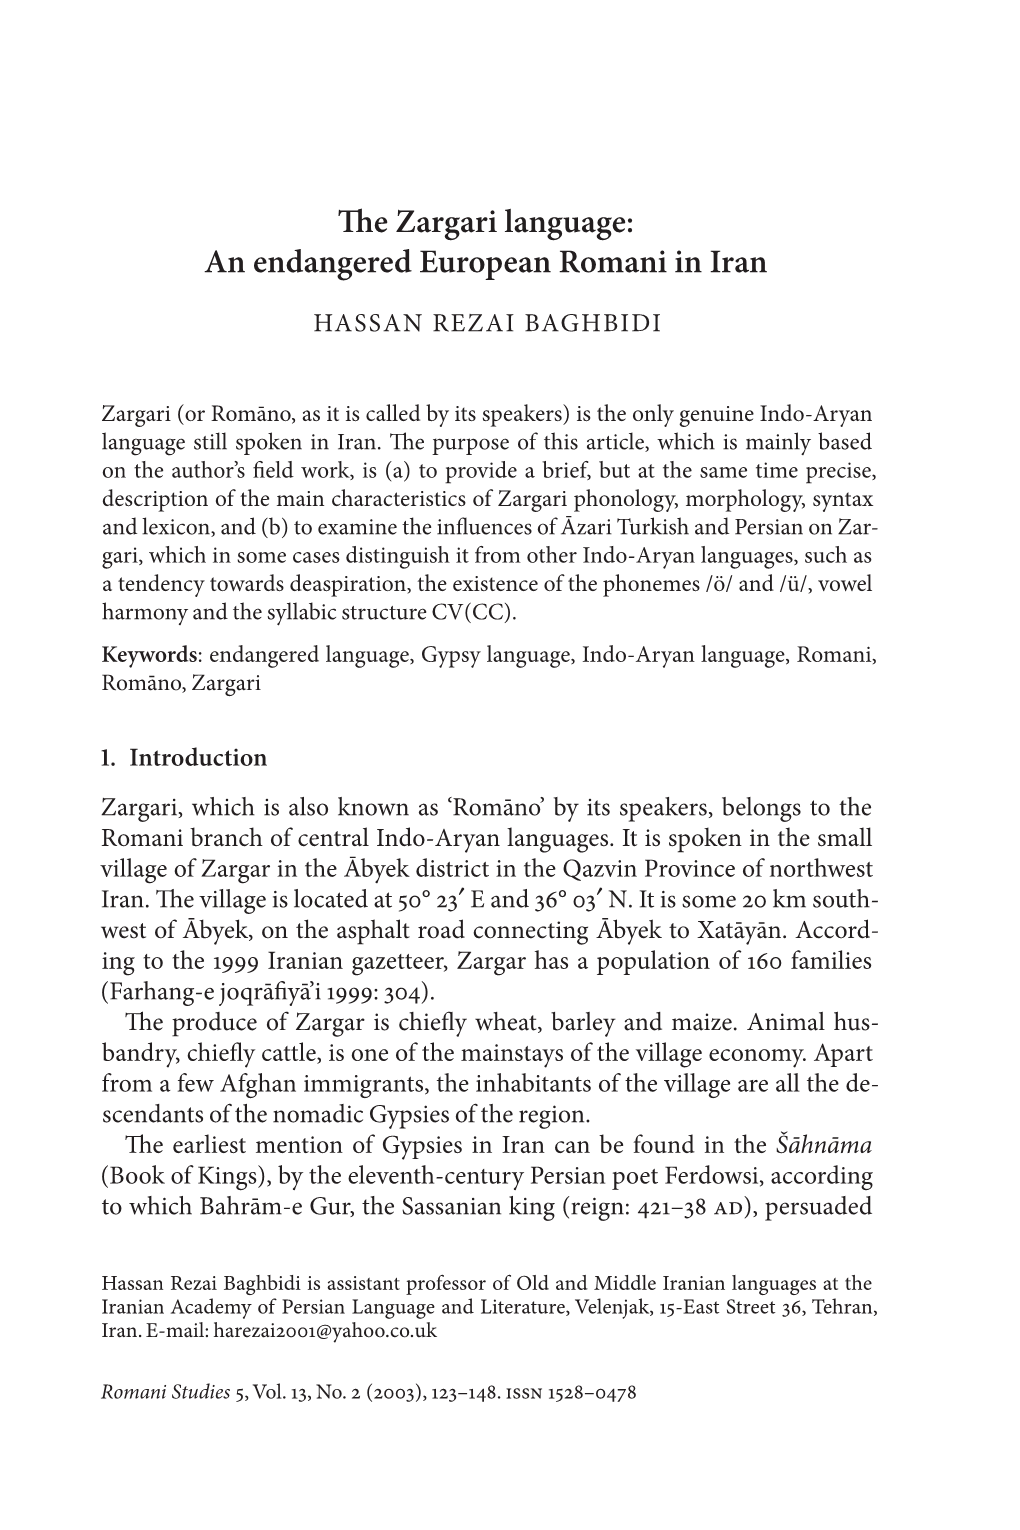 The Zargari Language: an Endangered European Romani in Iran